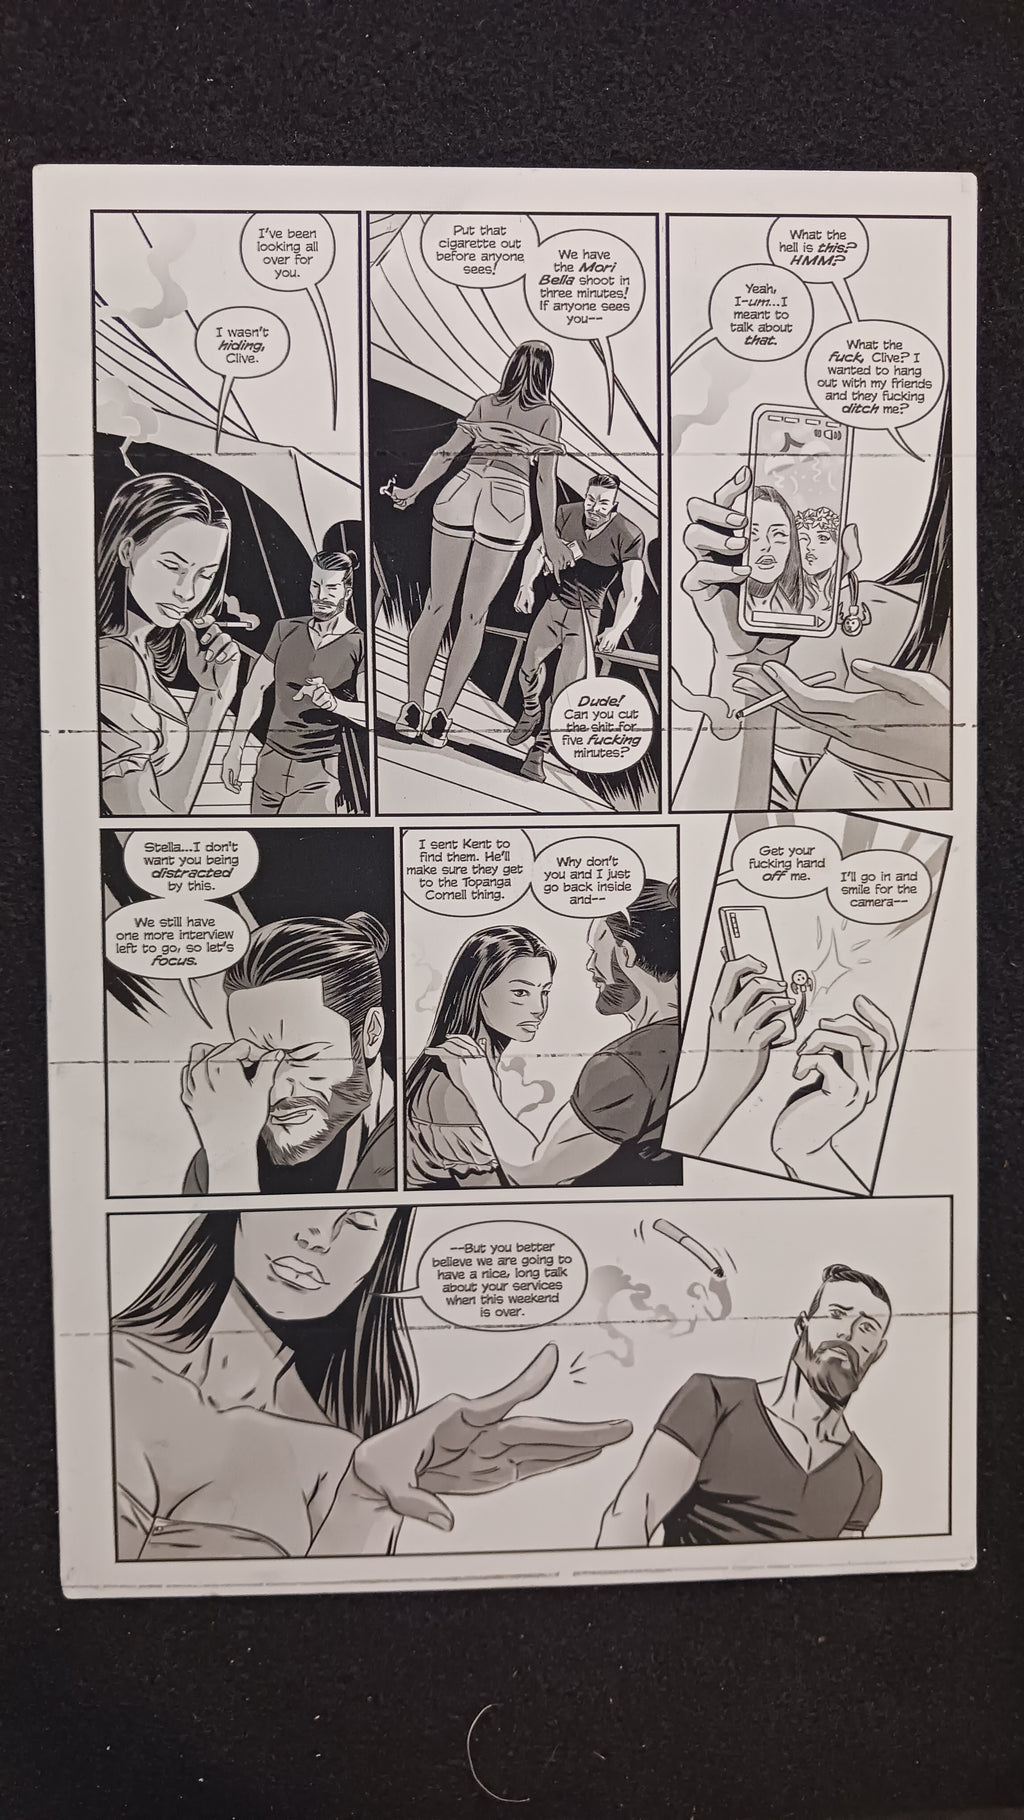 Killchella #2 - Page 16 - PRESSWORKS - Comic Art - Printer Plate - Black